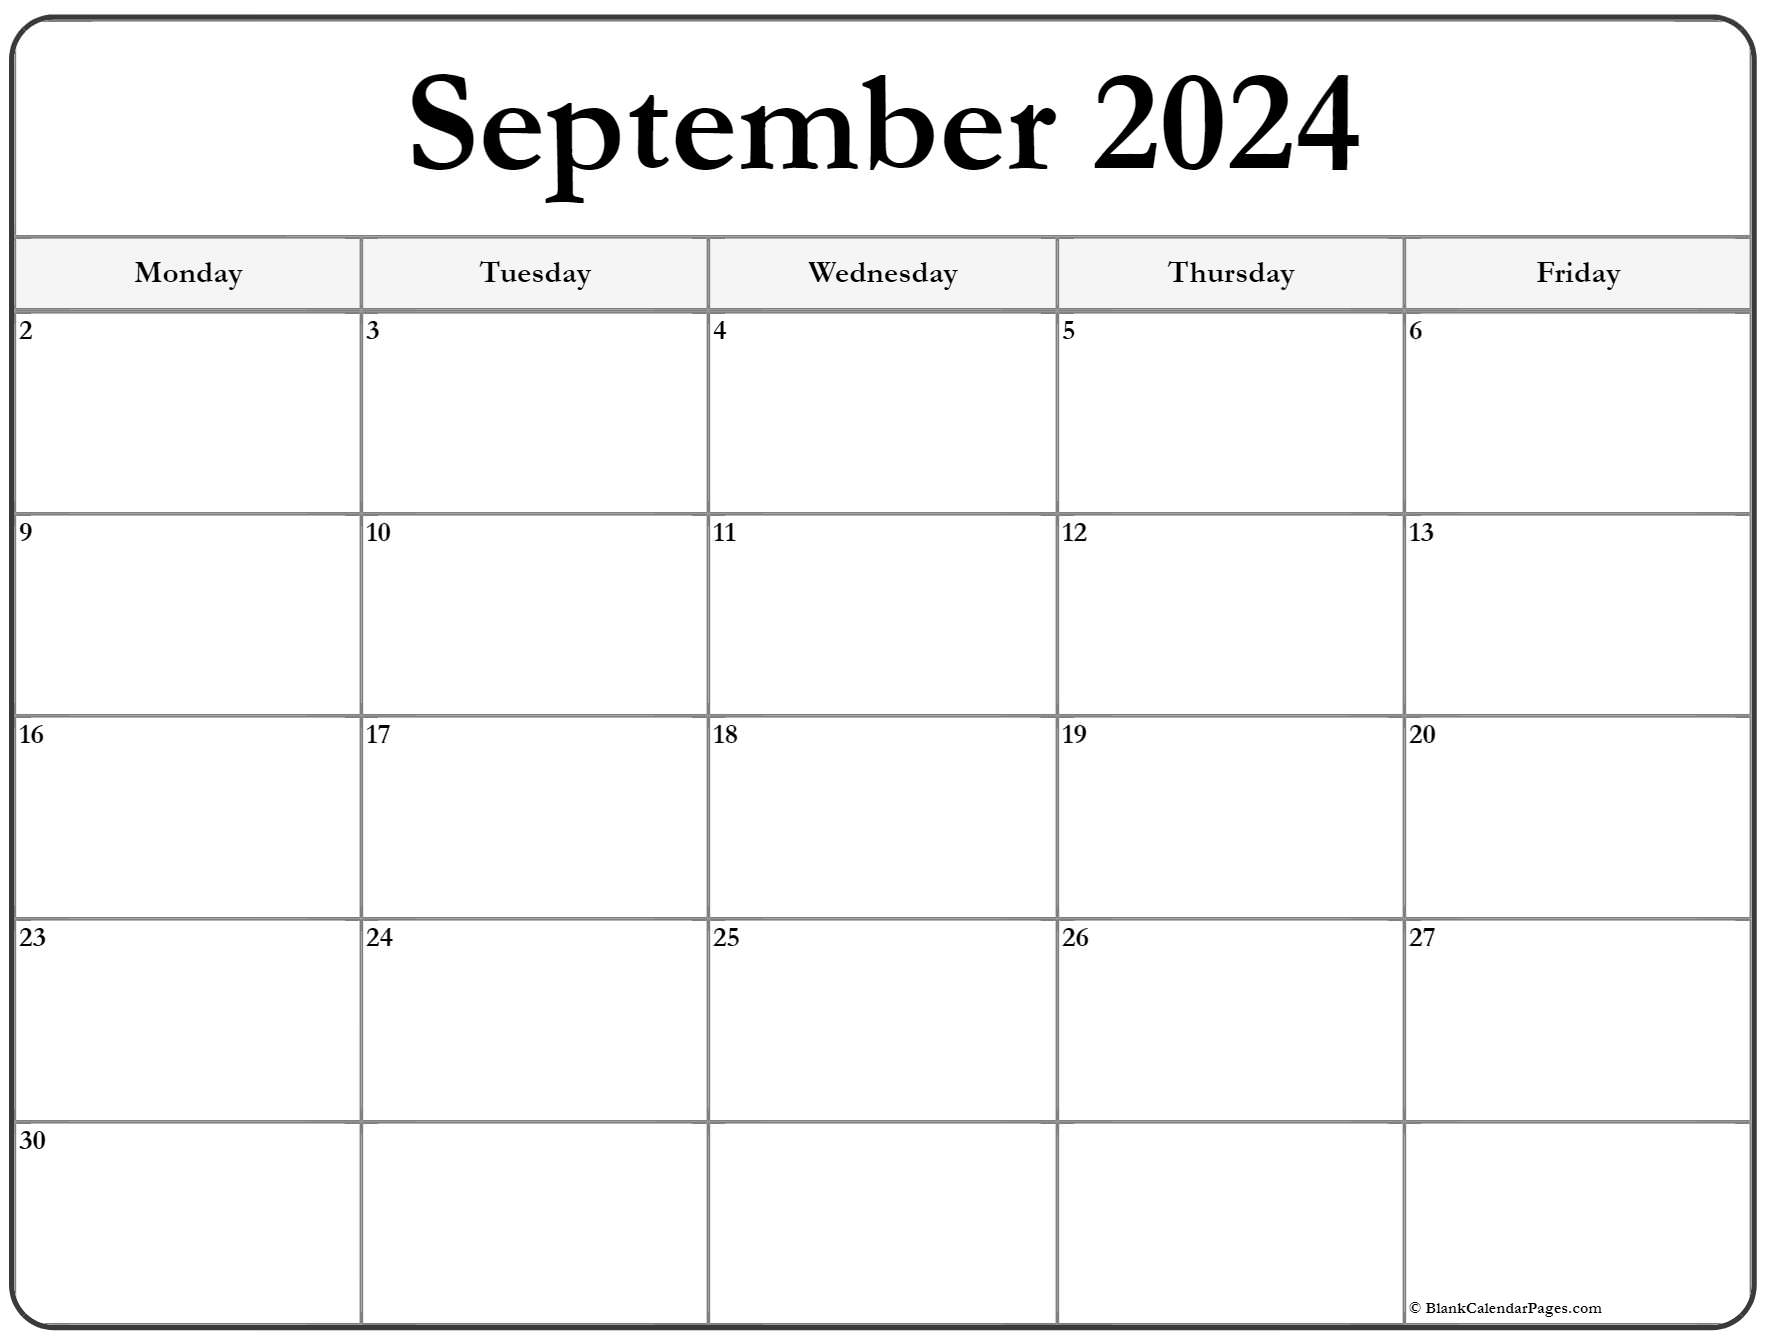 September 2020 Monday Calendar | Monday to Sunday